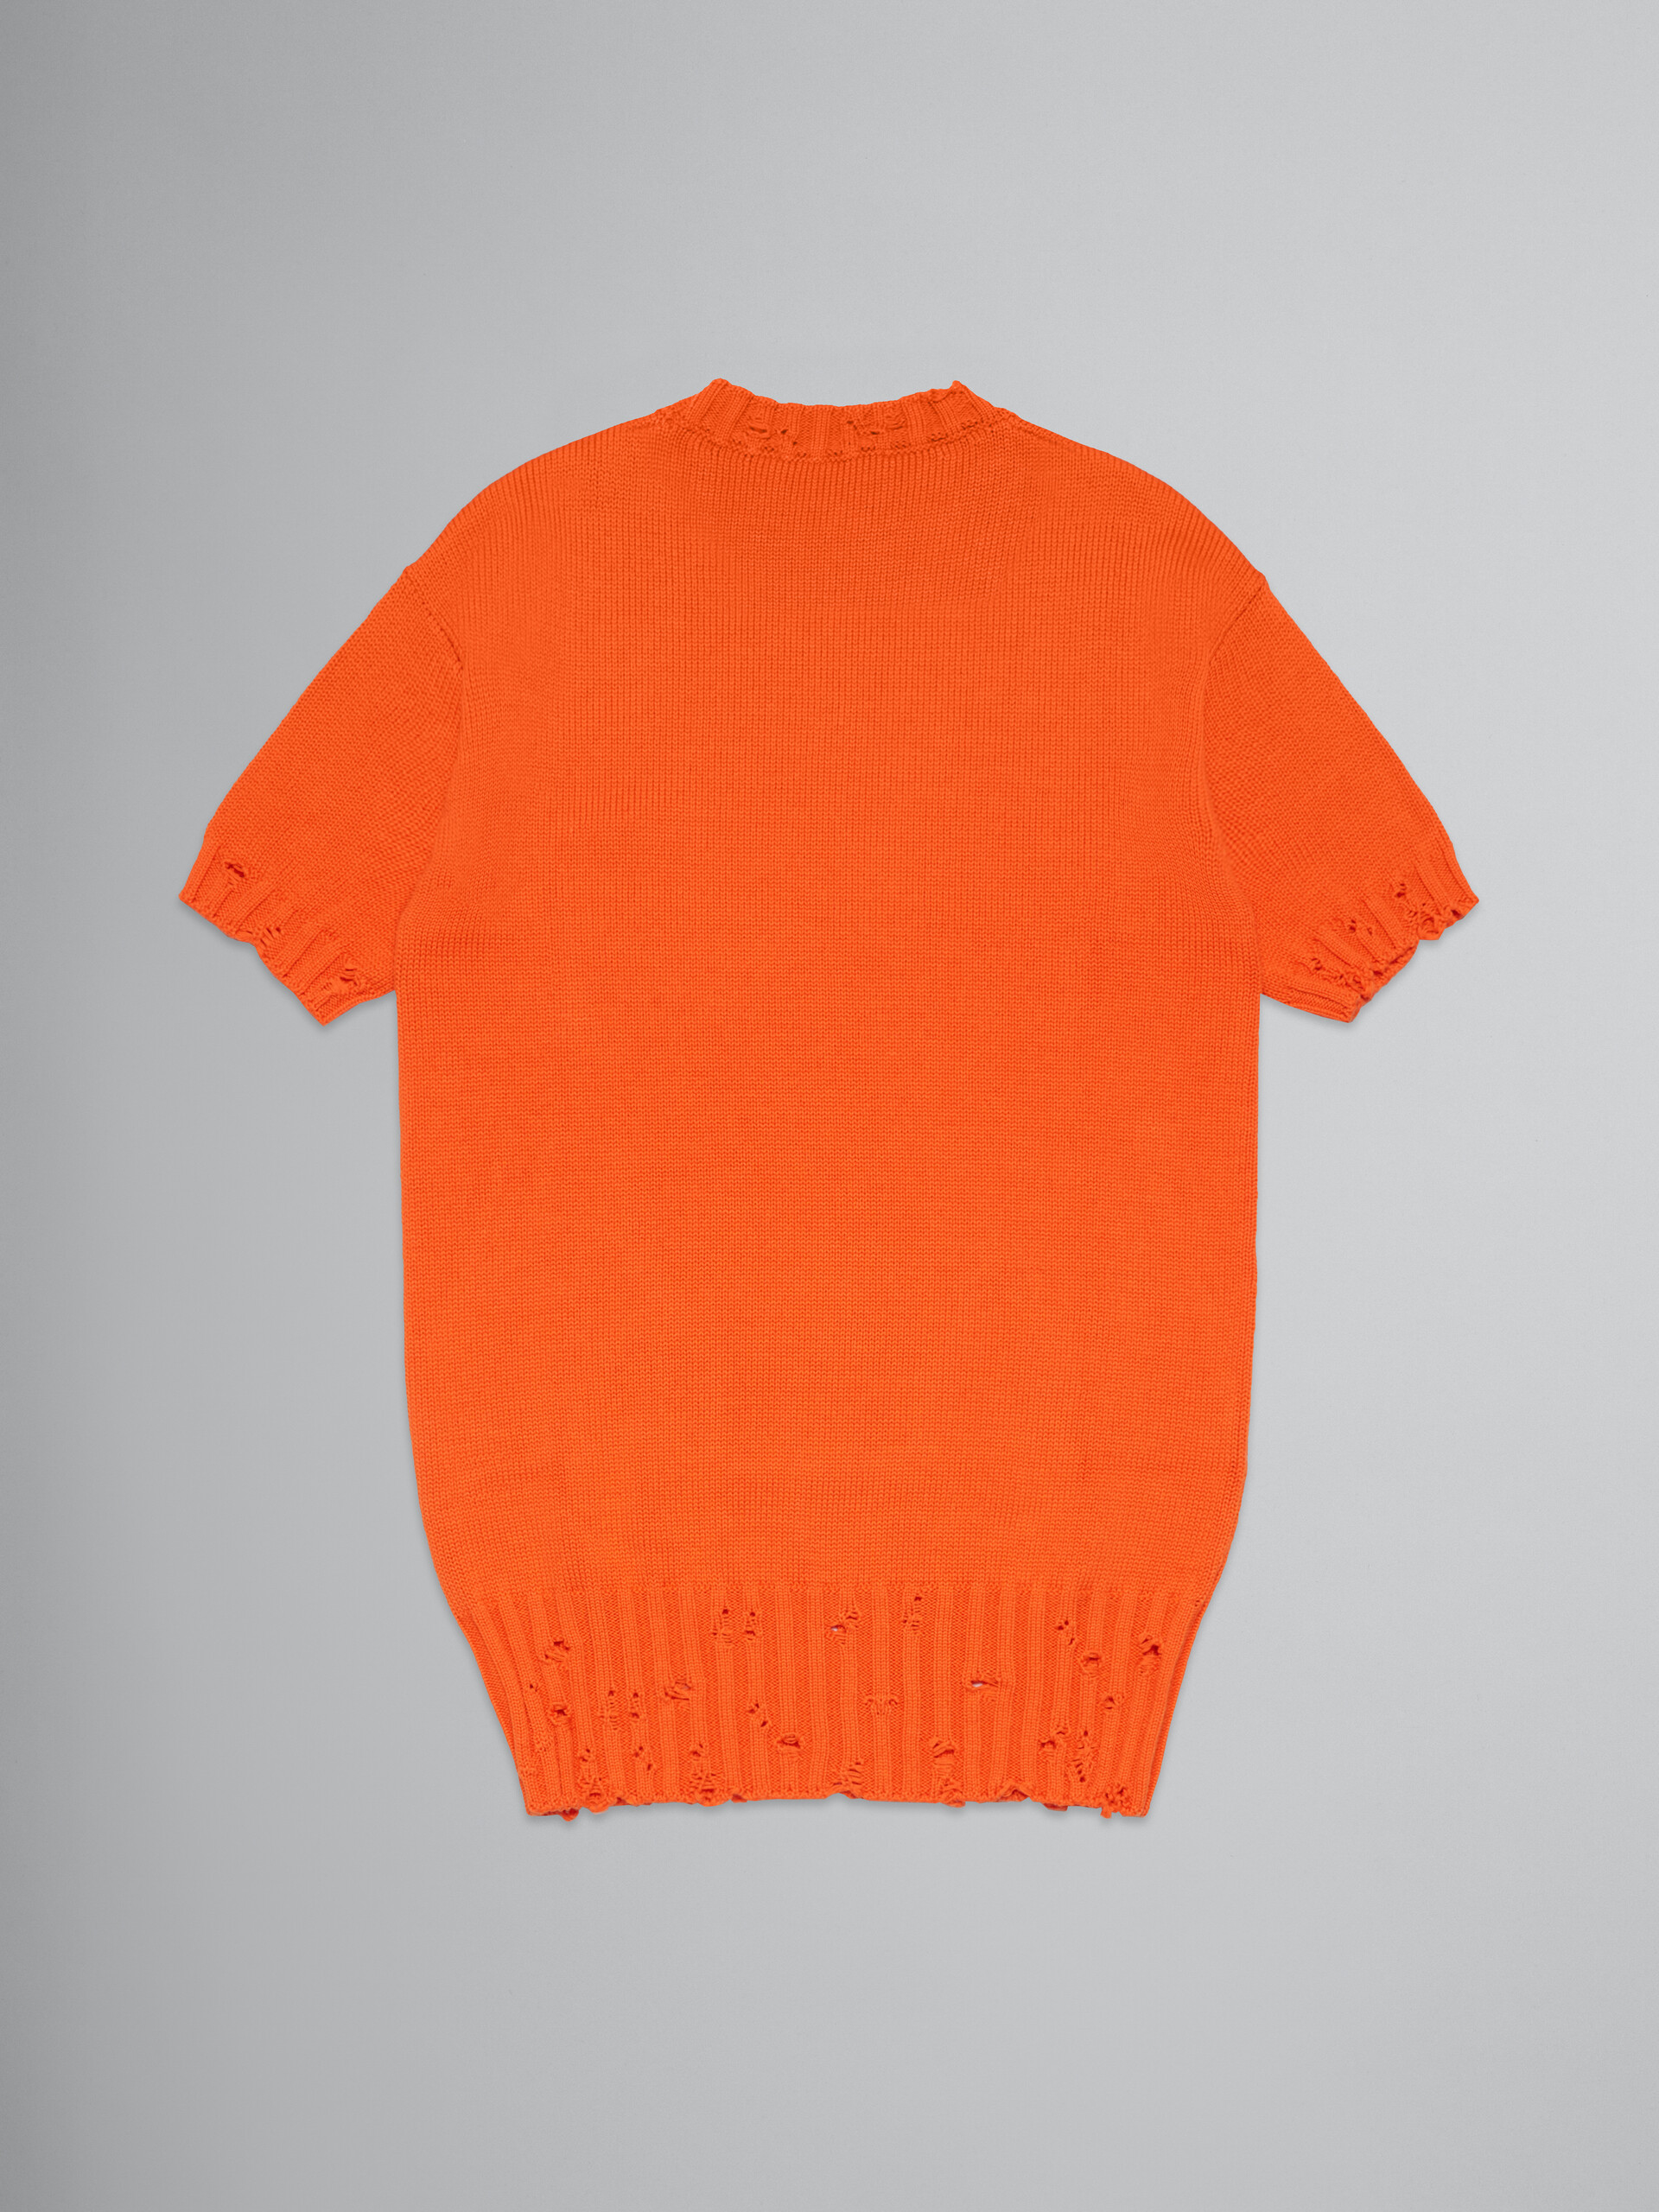 Orange cotton dress - Dresses - Image 2